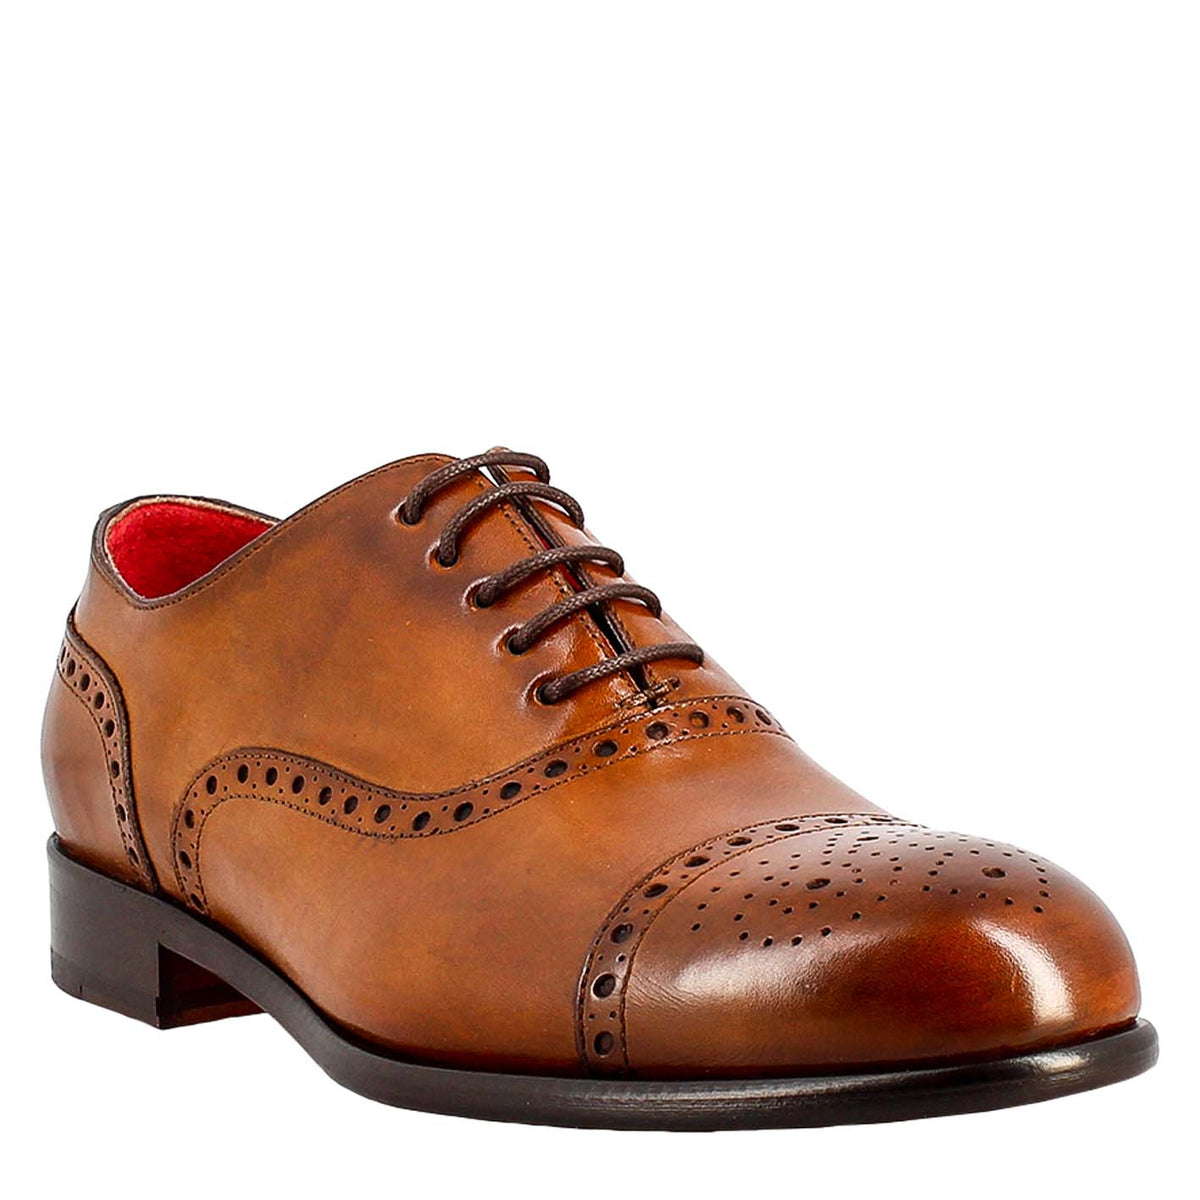 Men's elegant brown leather semi brogue oxford